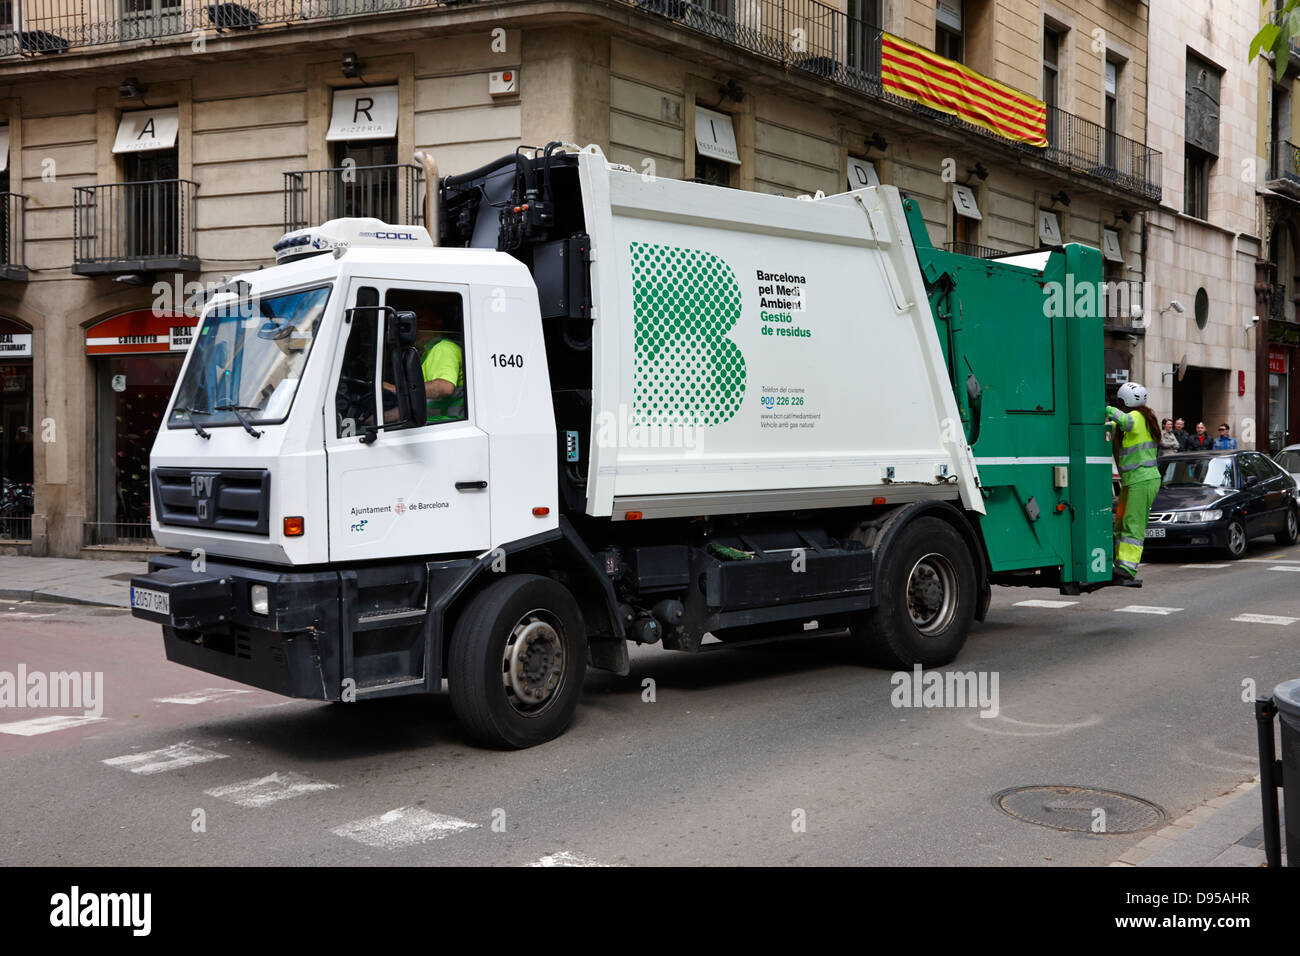 barcelona pel medi ambient gestio de residus waste disposal vehicle  catalonia spain Stock Photo - Alamy